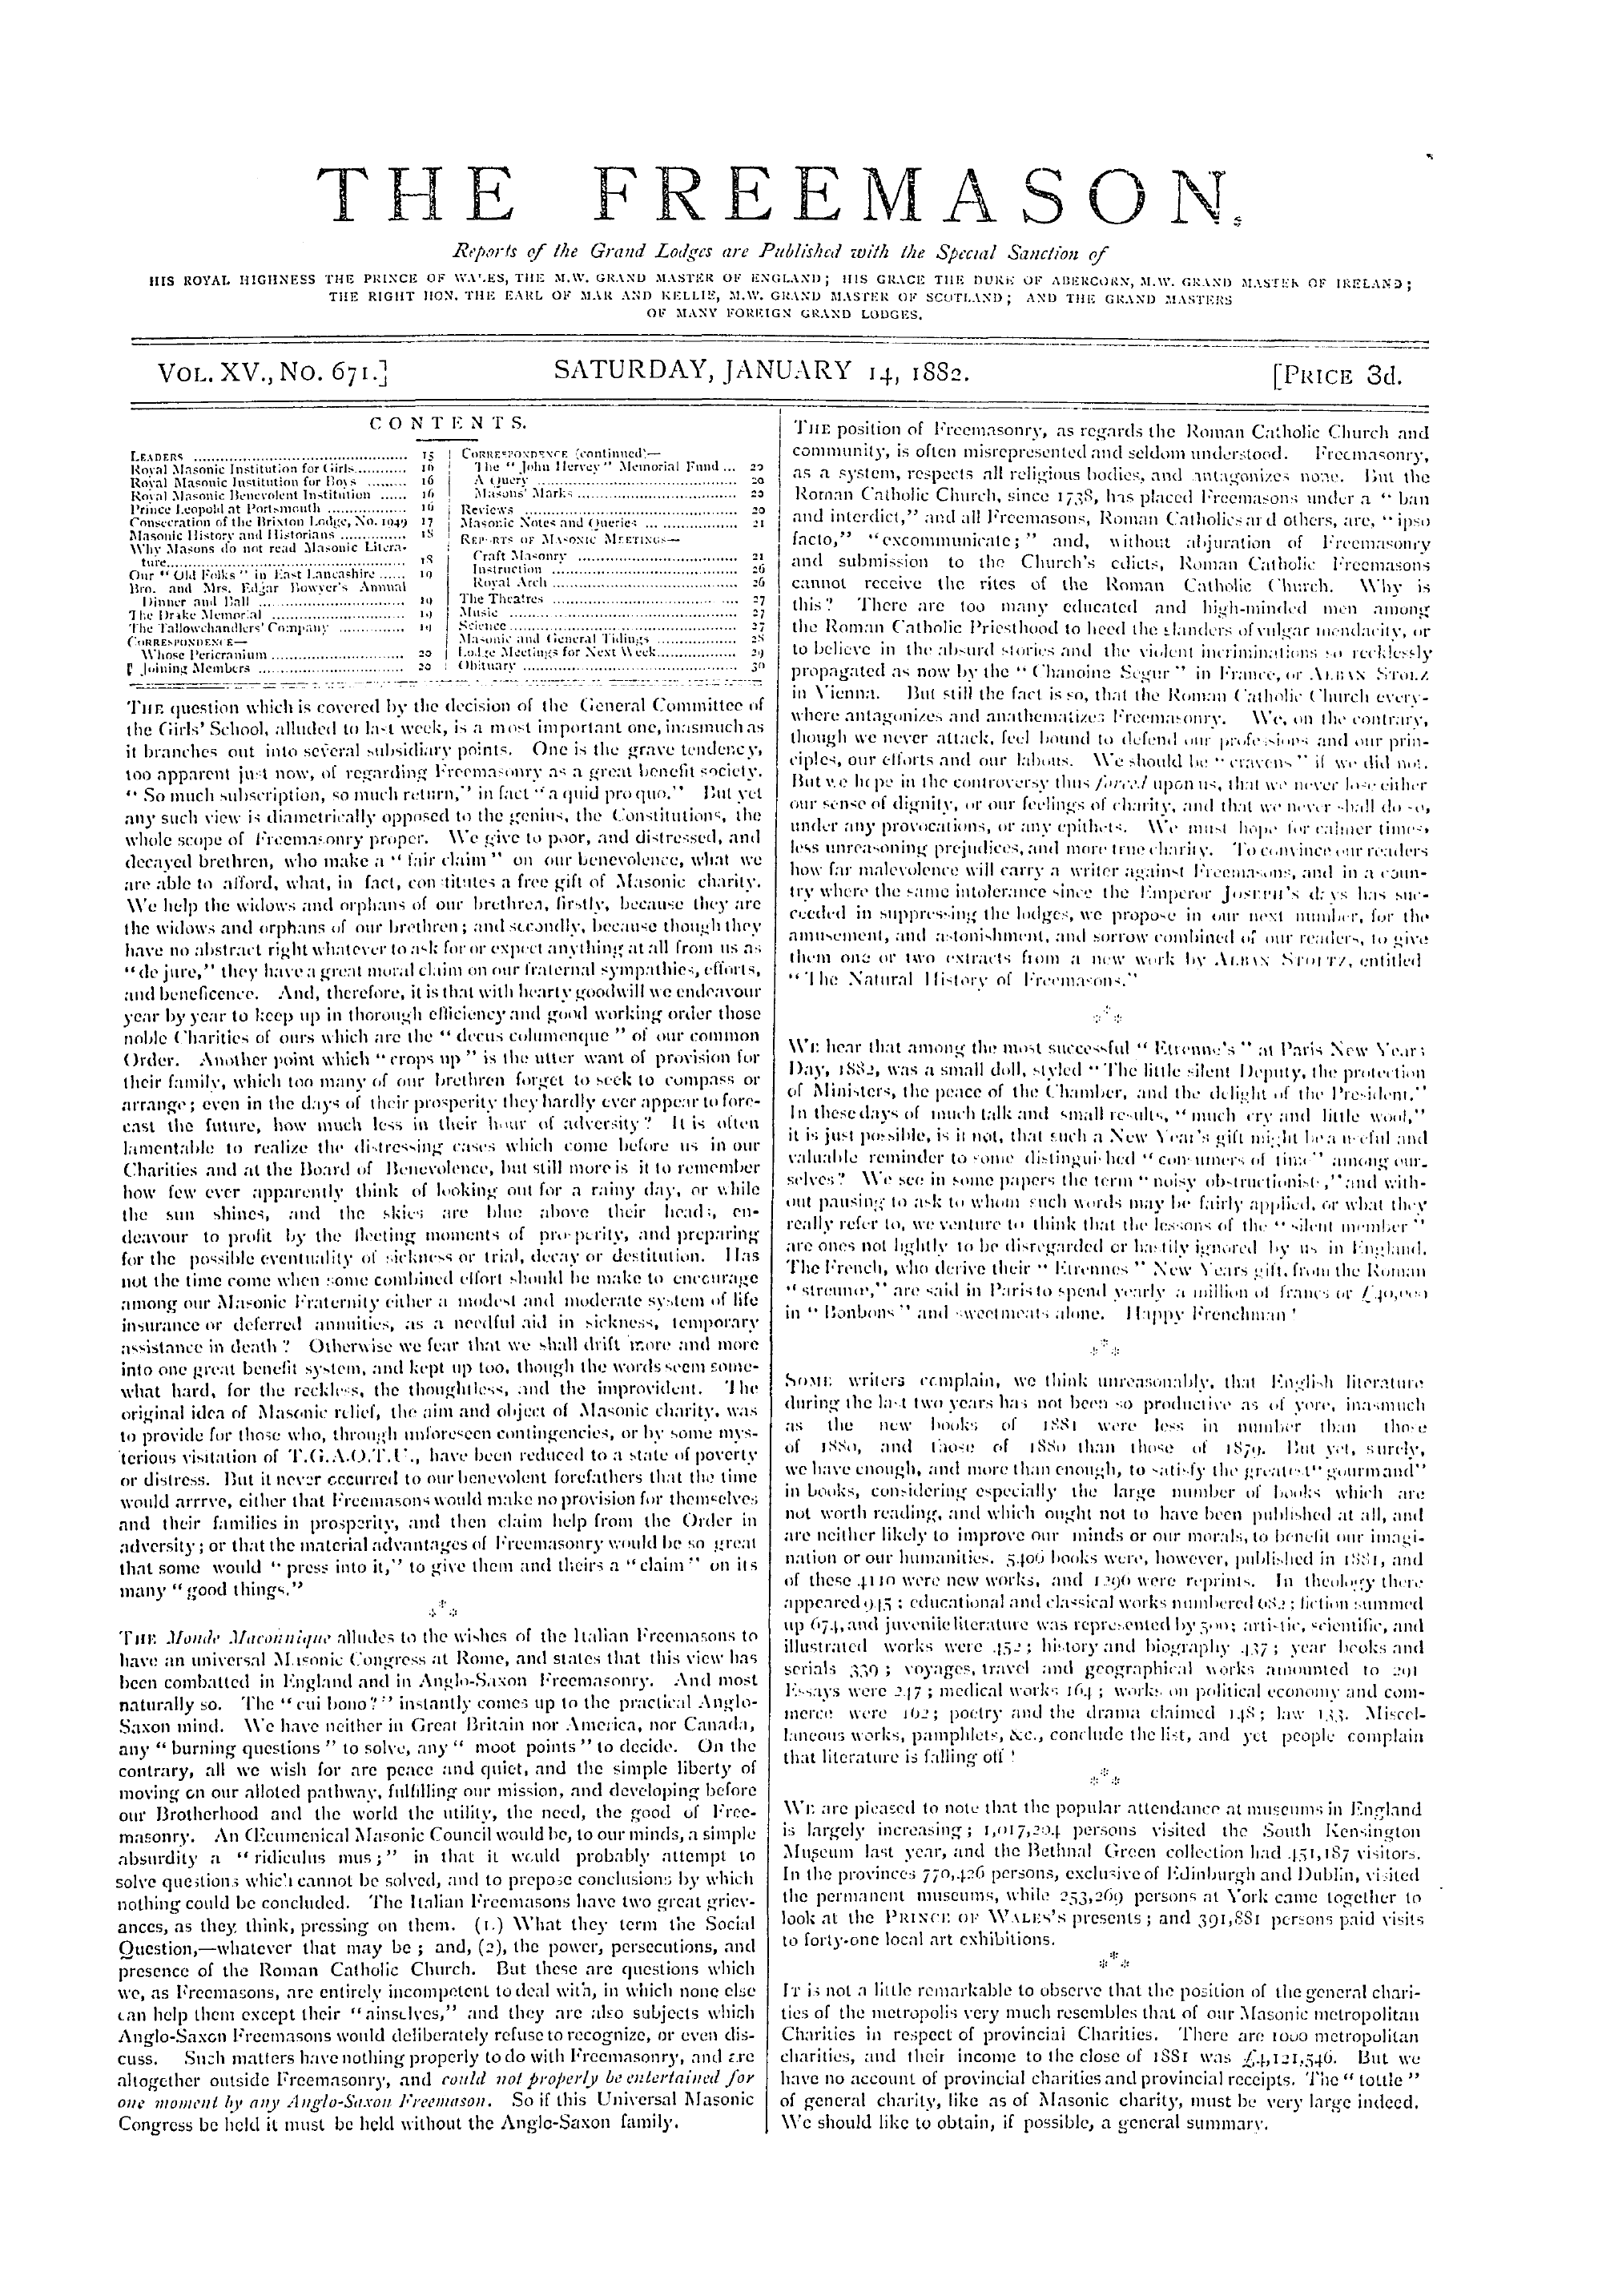 The Freemason: 1882-01-14 - Contents.